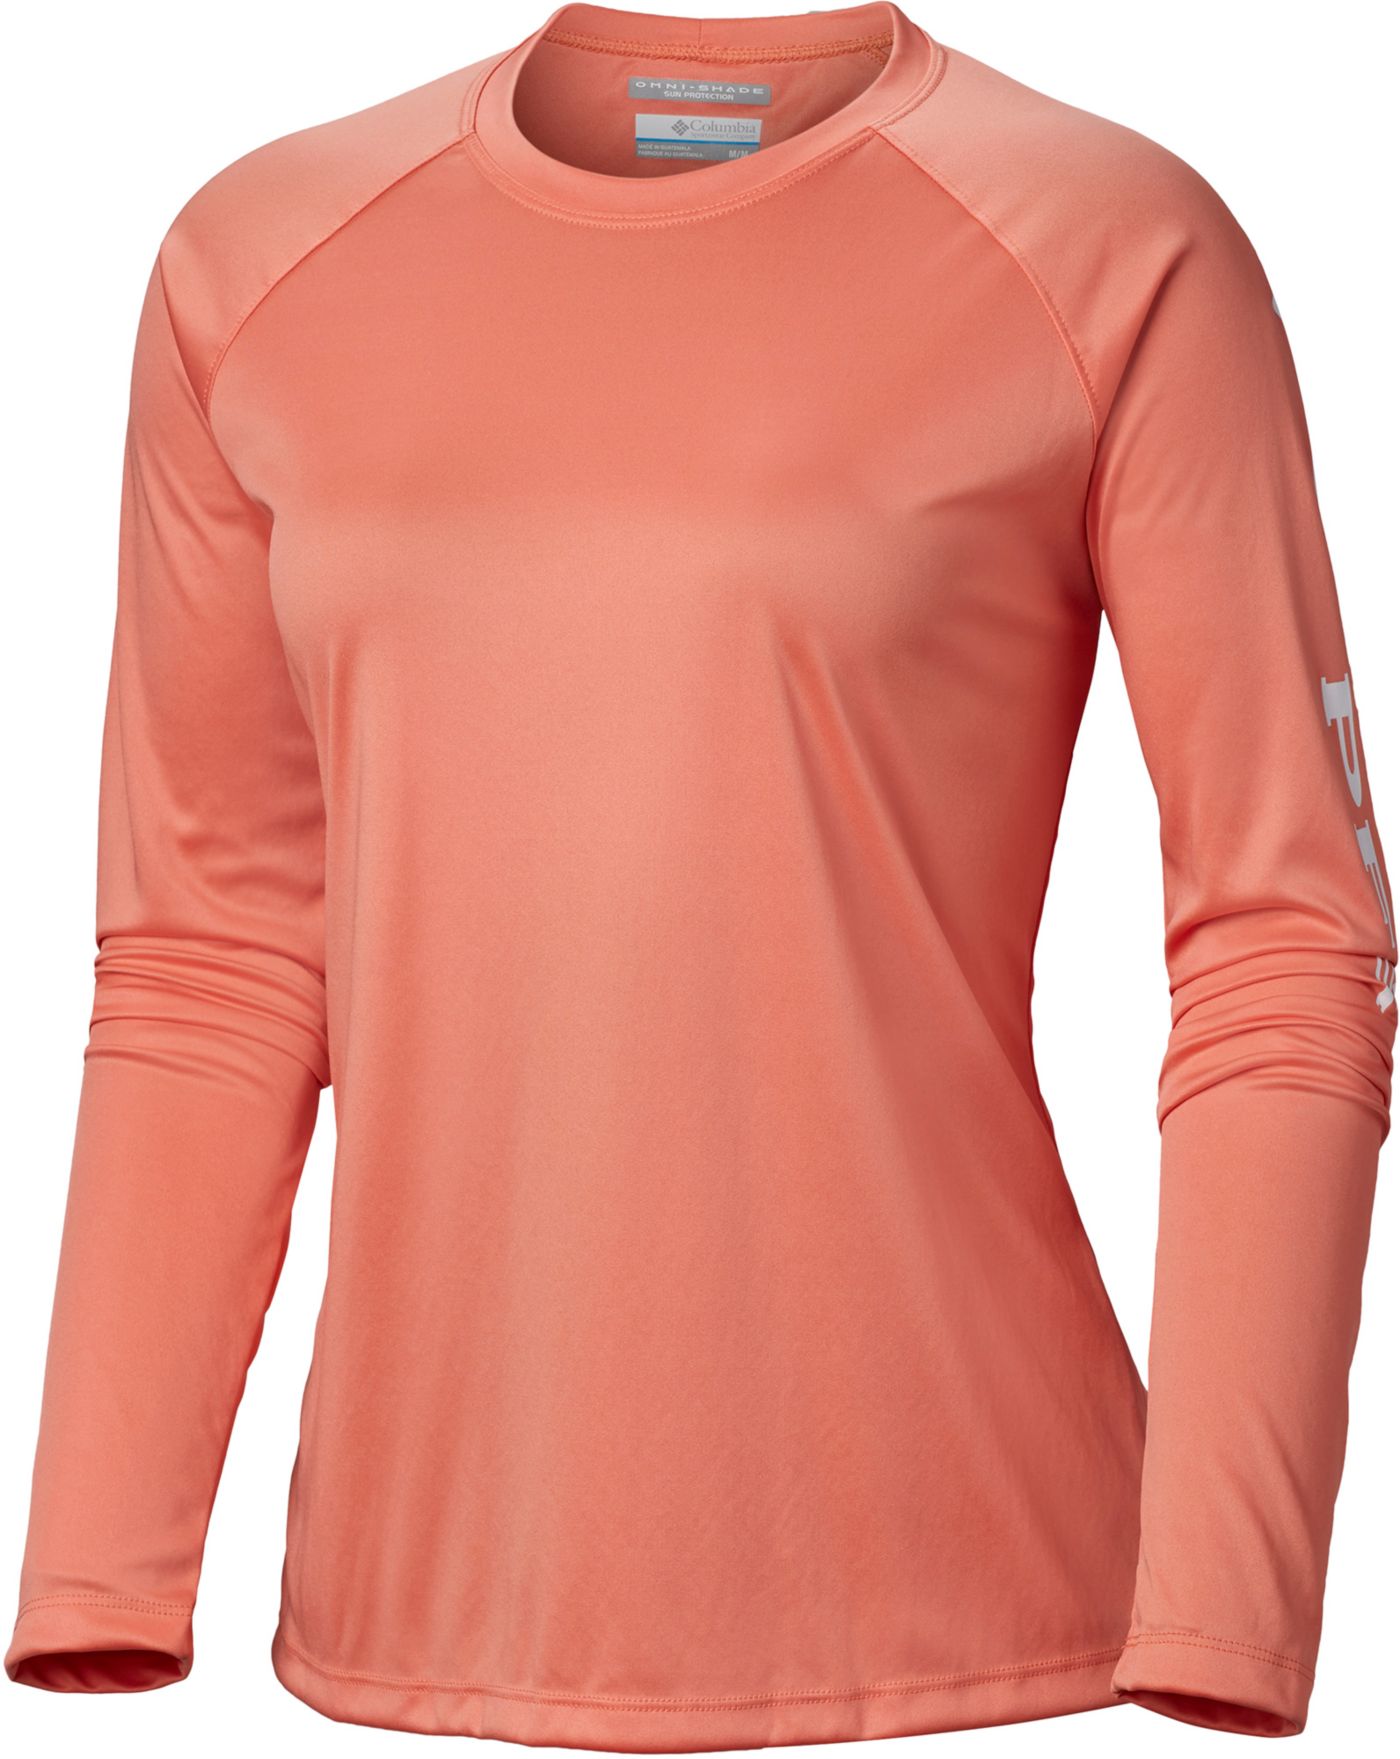 Columbia Women's PFG Tidal Tee II Long Sleeve Shirt DICK'S Sporting Goods